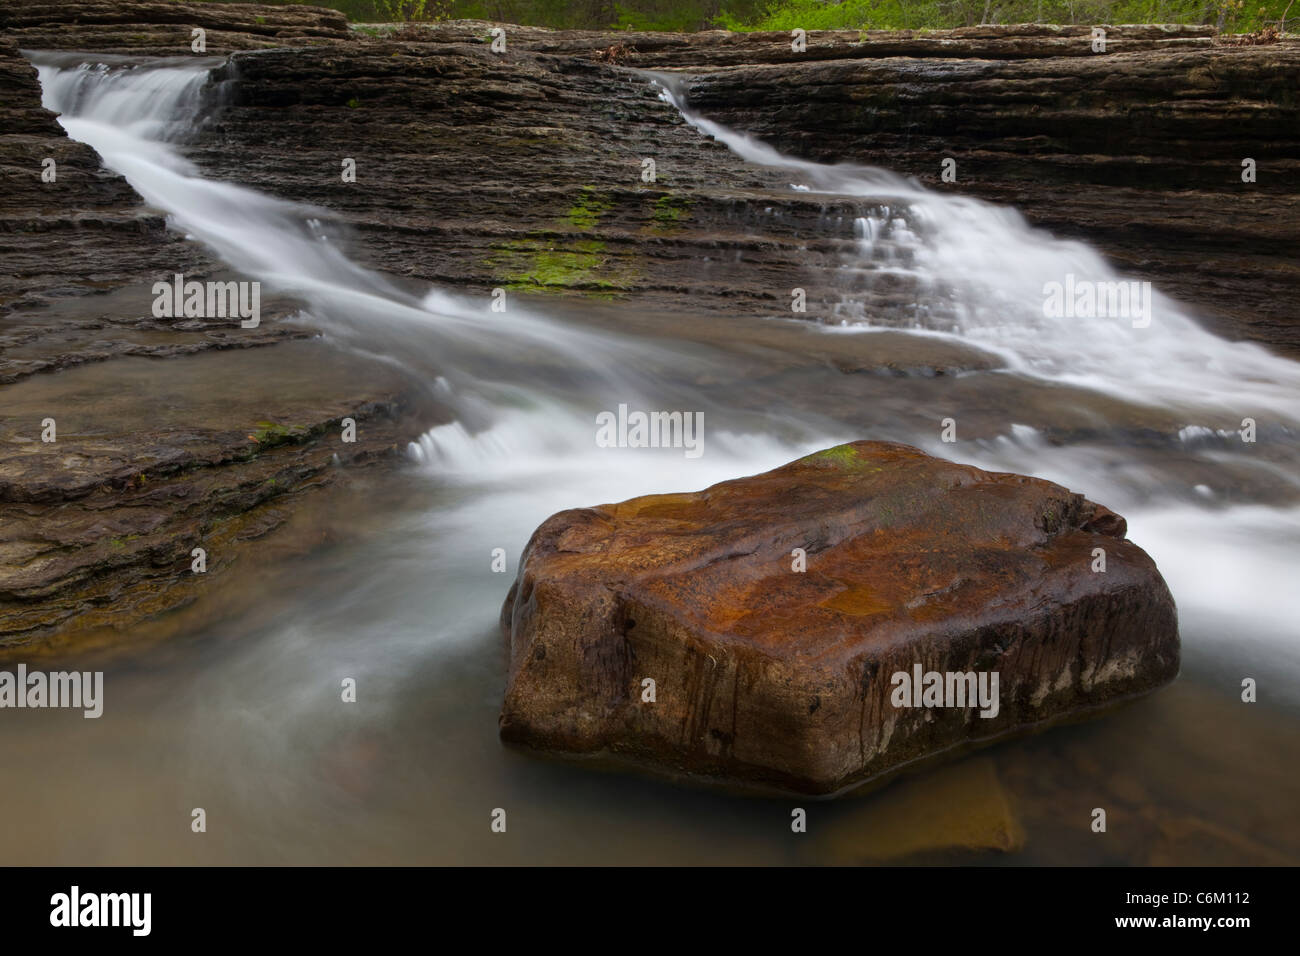 Six Finger Falls Waterfall in the Ozark Mountains of Arkansas– USA Stock Photo